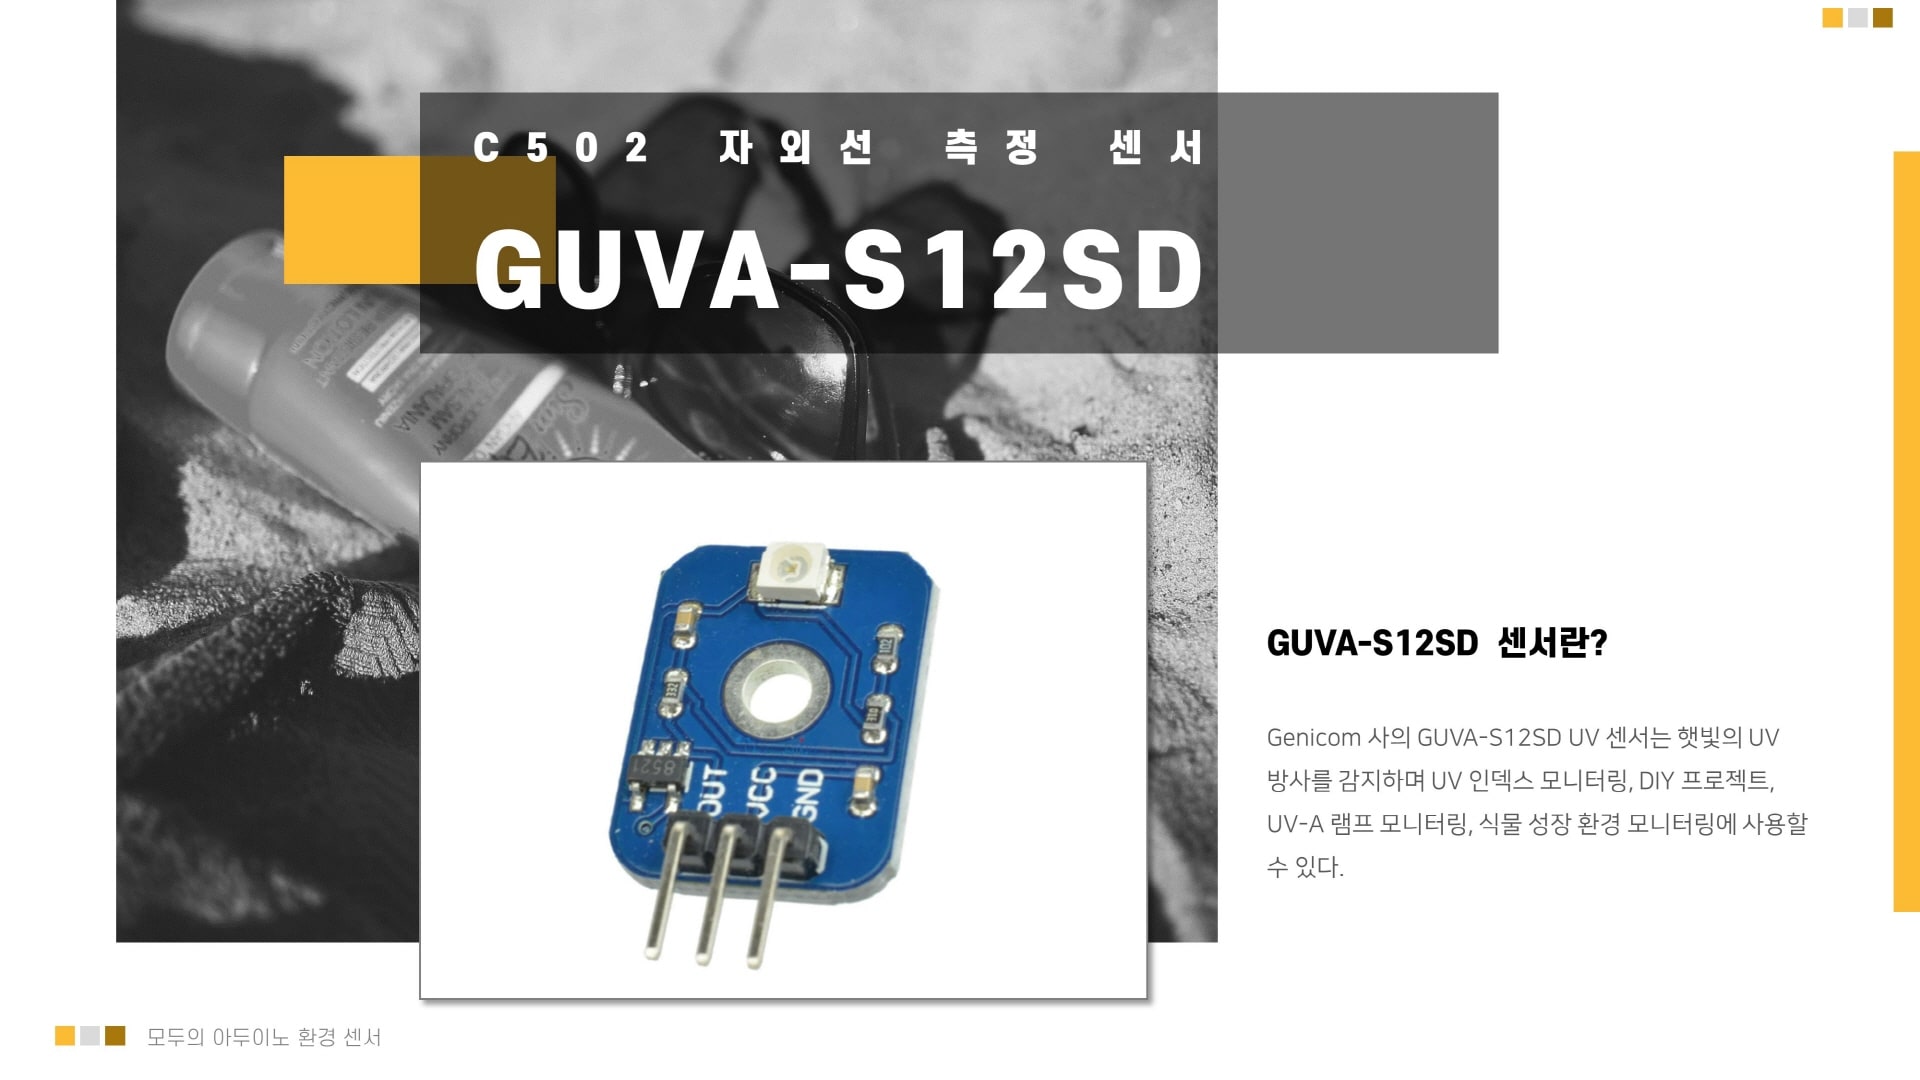 GUVA-S12SD 자외선(UV) 아두이노 센서 이미지 입니다.